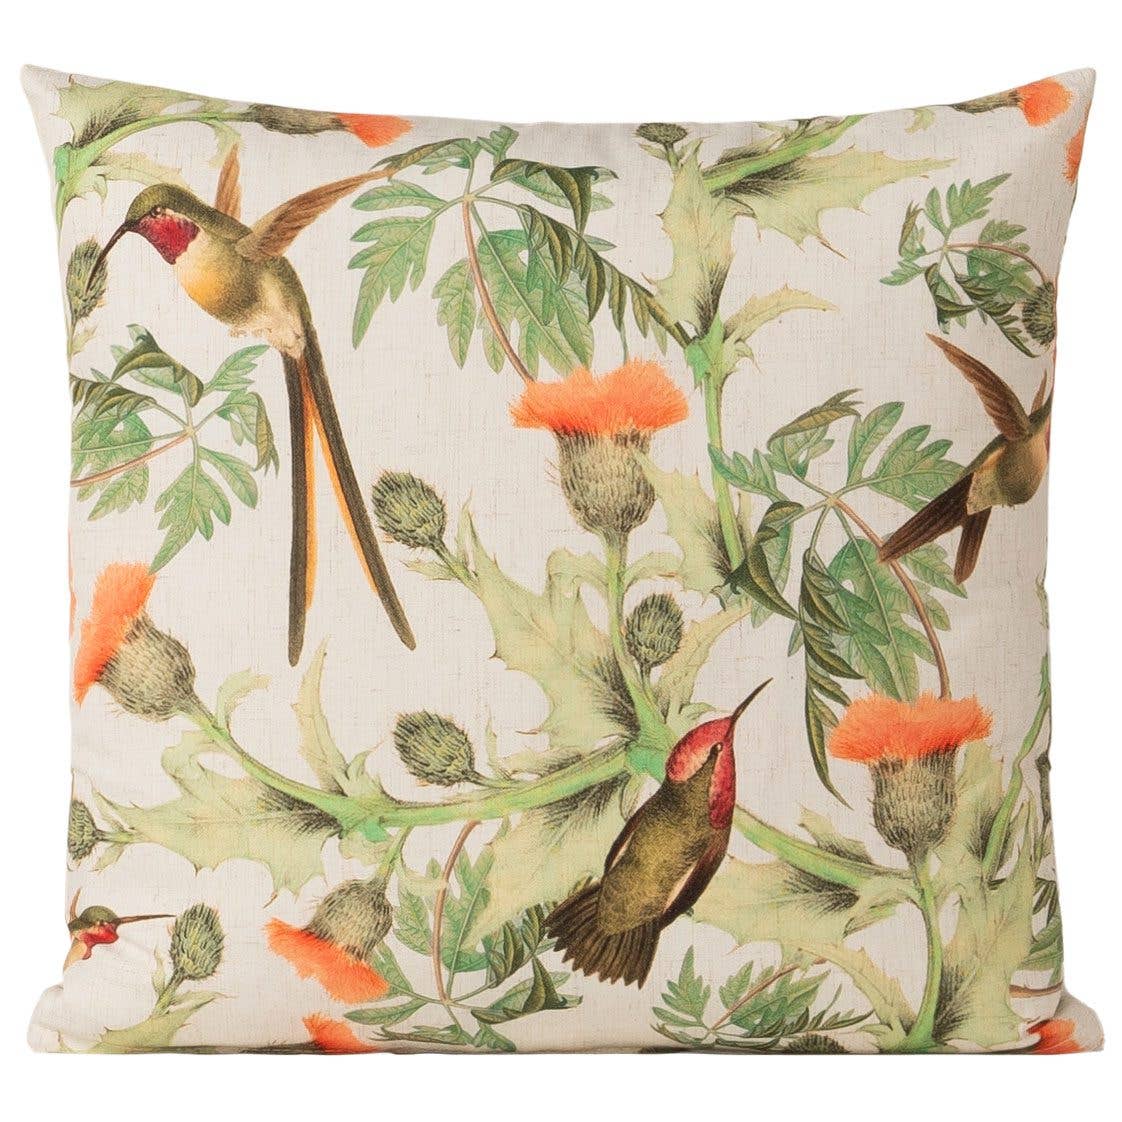 Smithsonian Flying Jewels Hummingbird Print Throw Pillow: 20 x 20